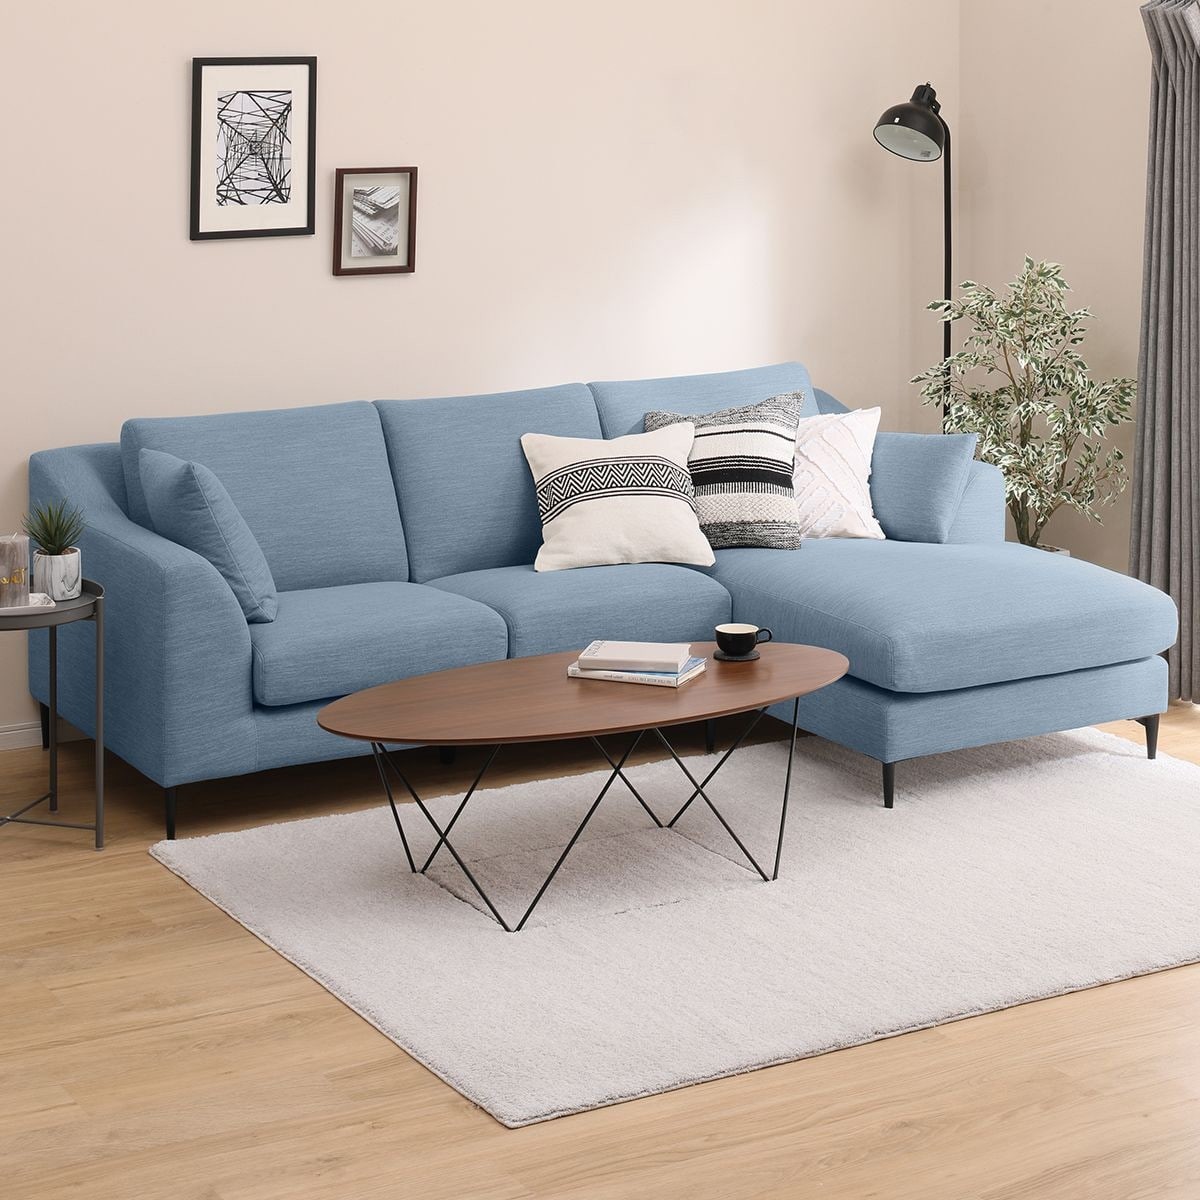 Catalina l shape sofa set in sky blue color urban